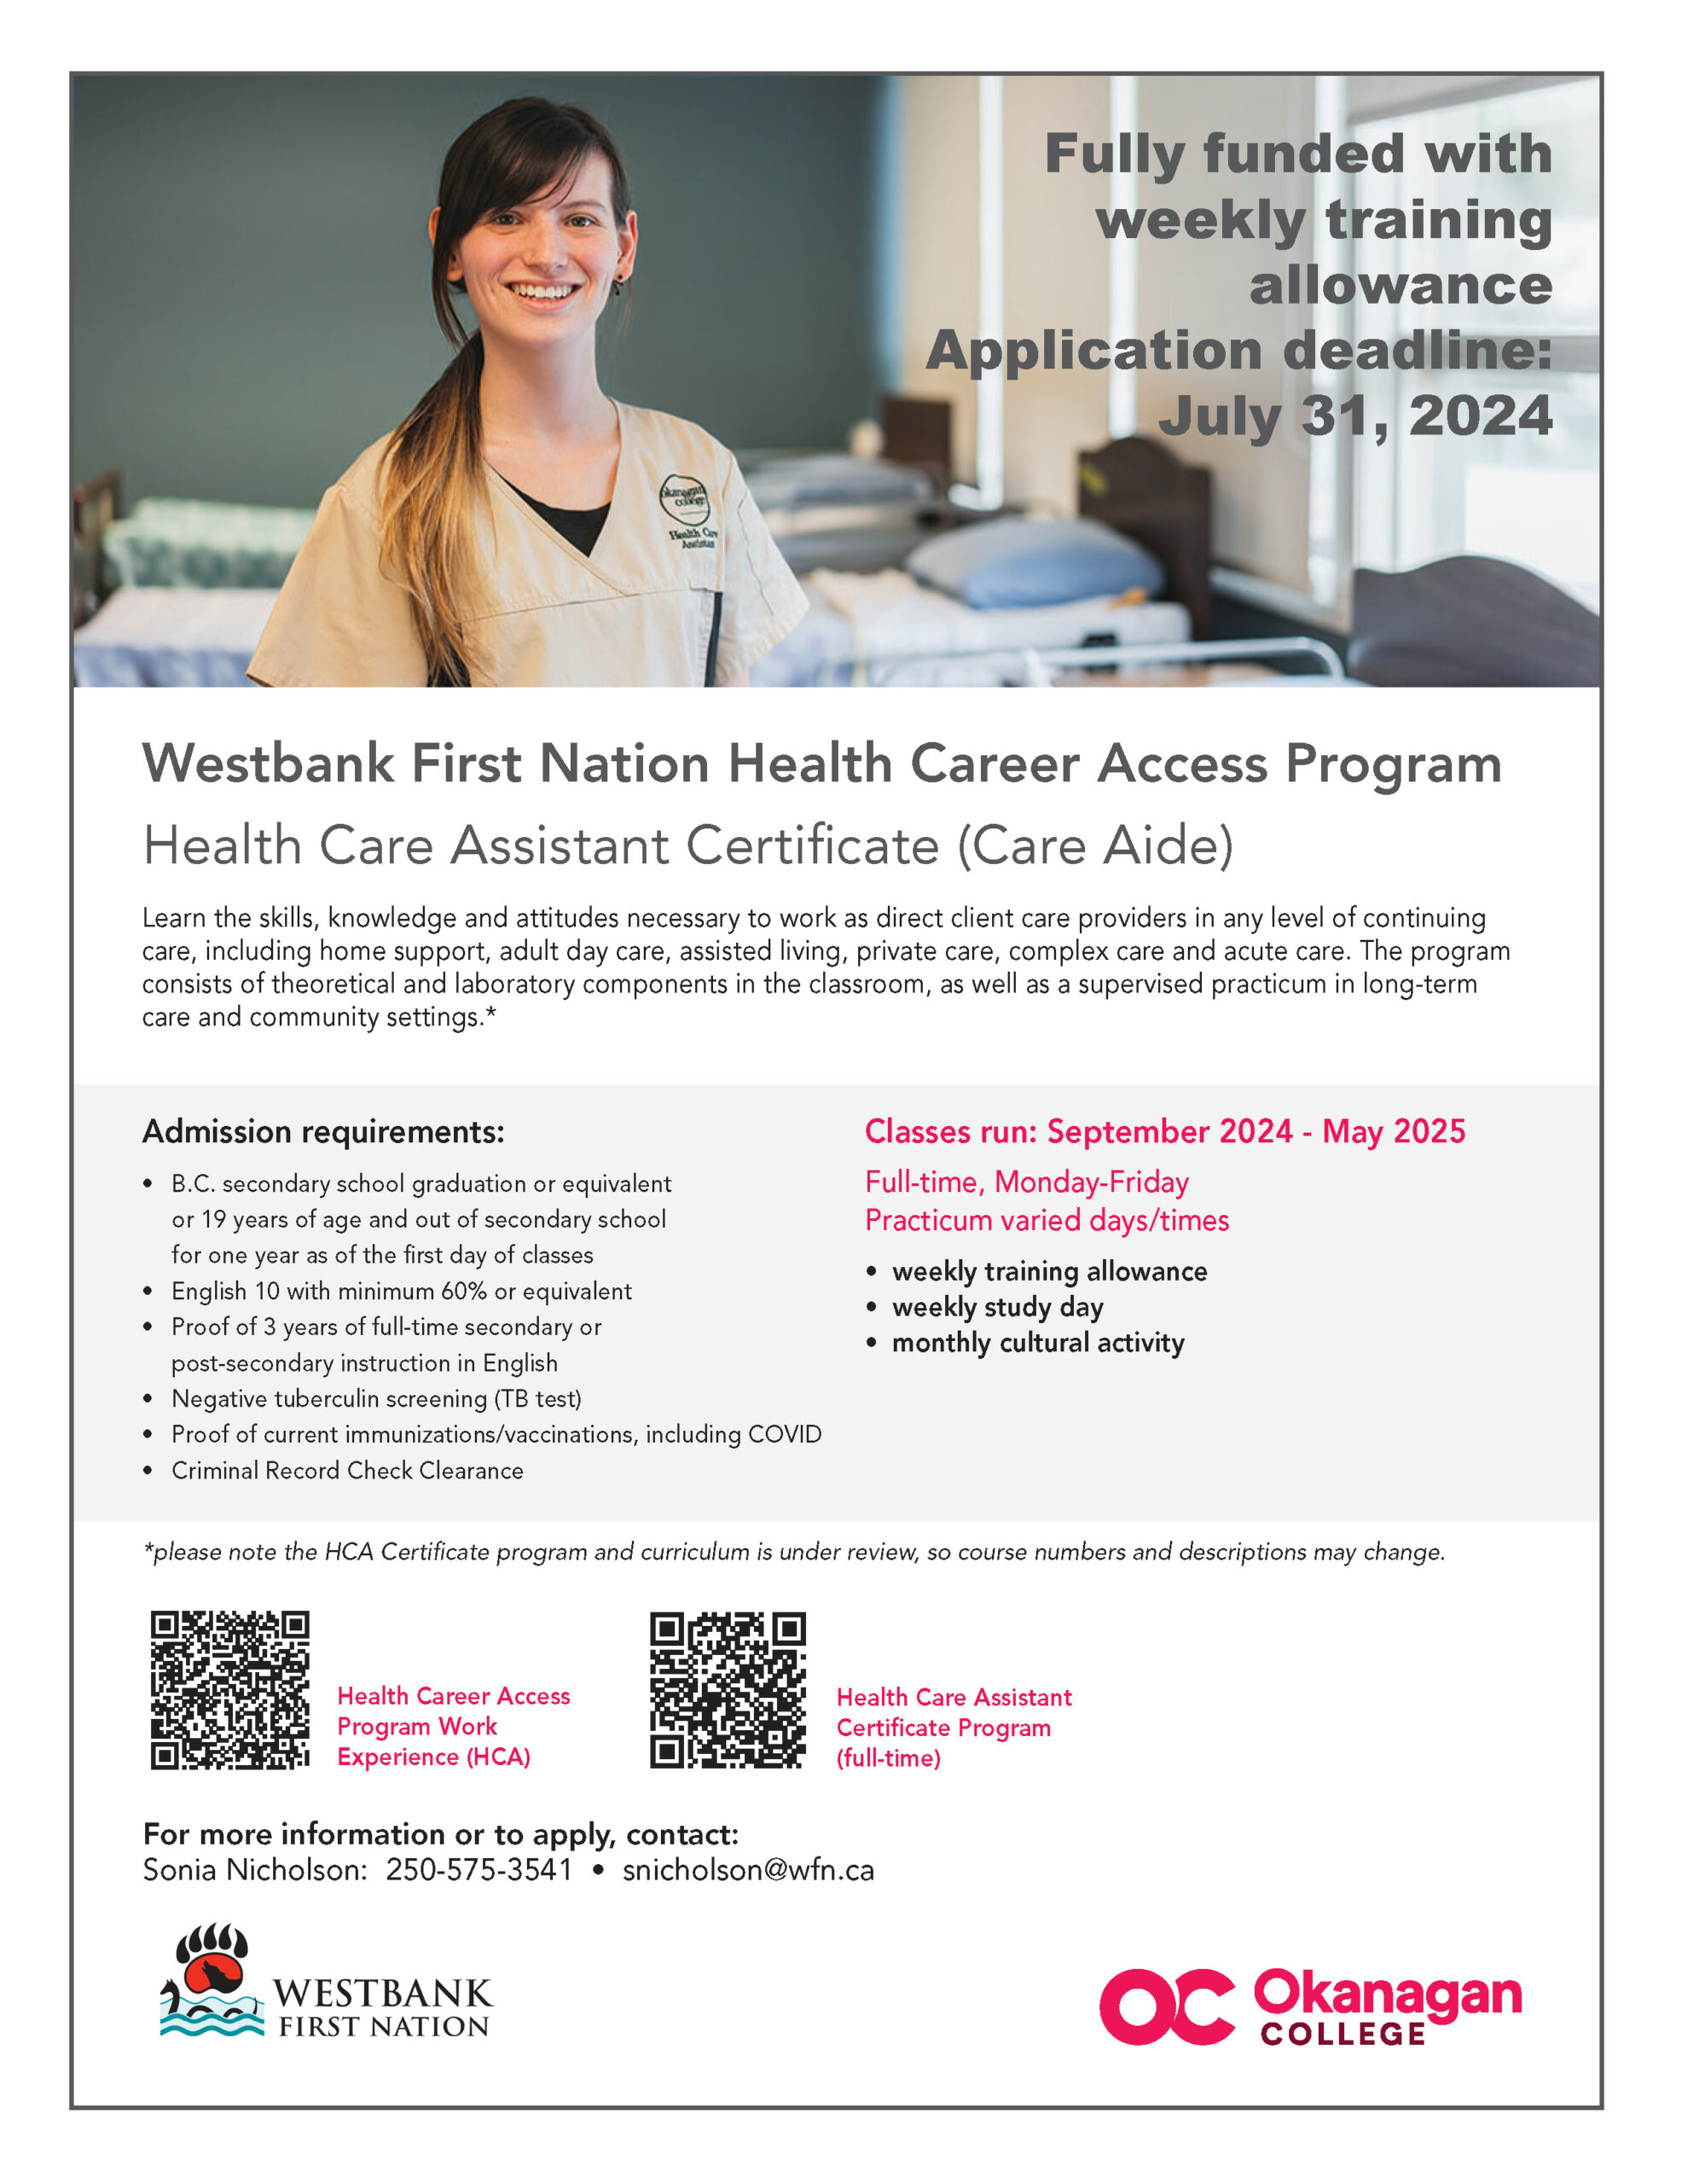 Health Care Assistant Certificate (Care Aide) program at Okanagan College